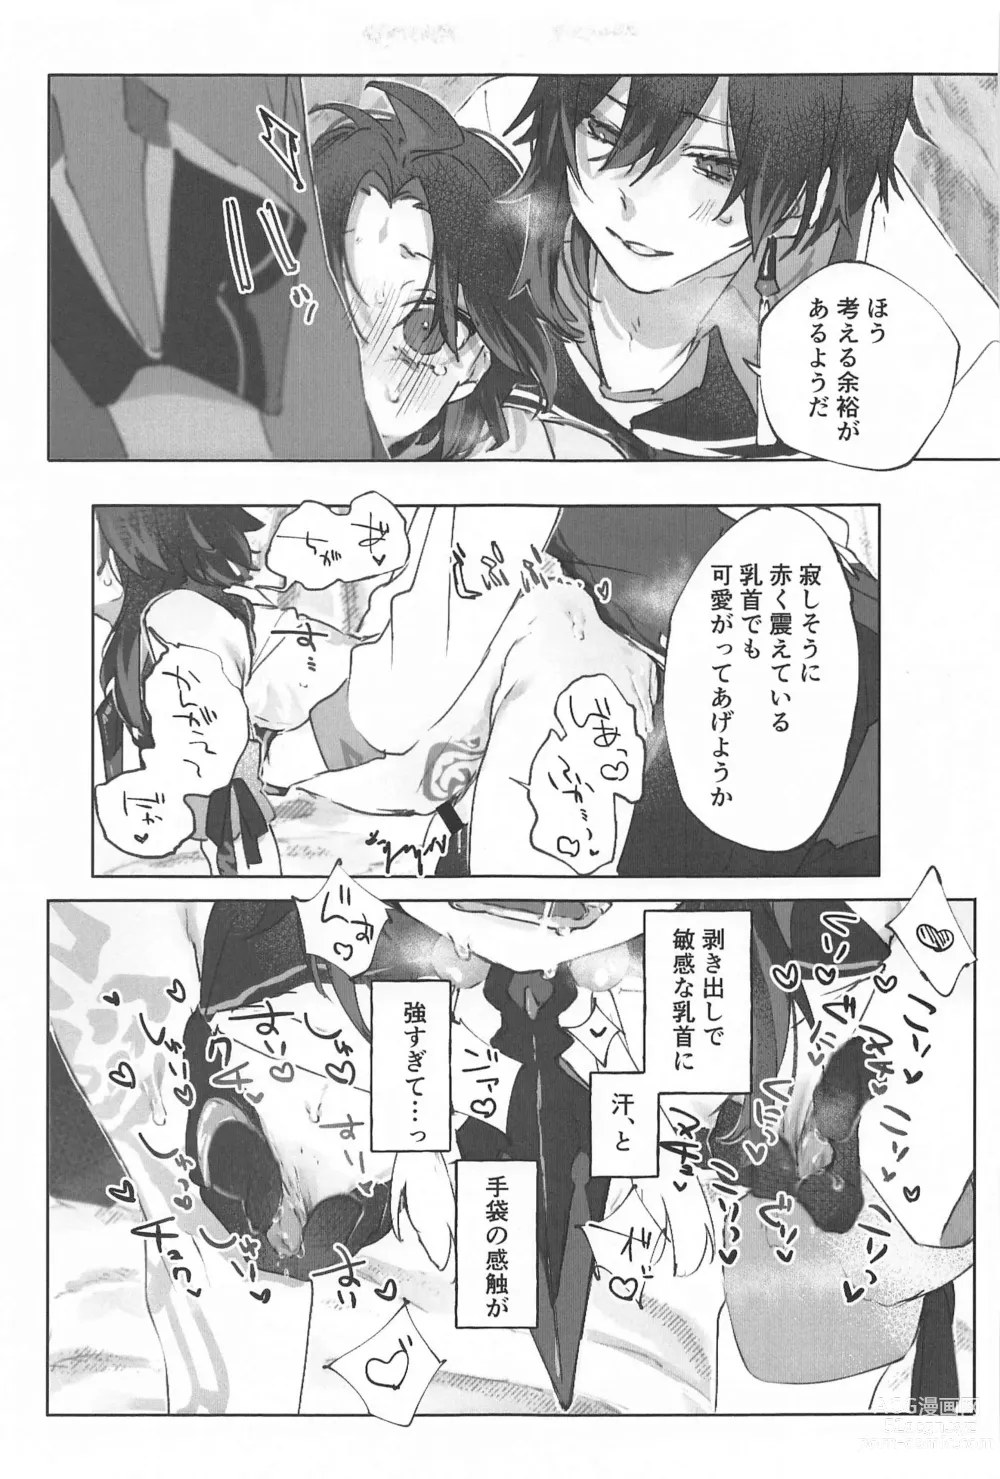 Page 39 of doujinshi Okawari.